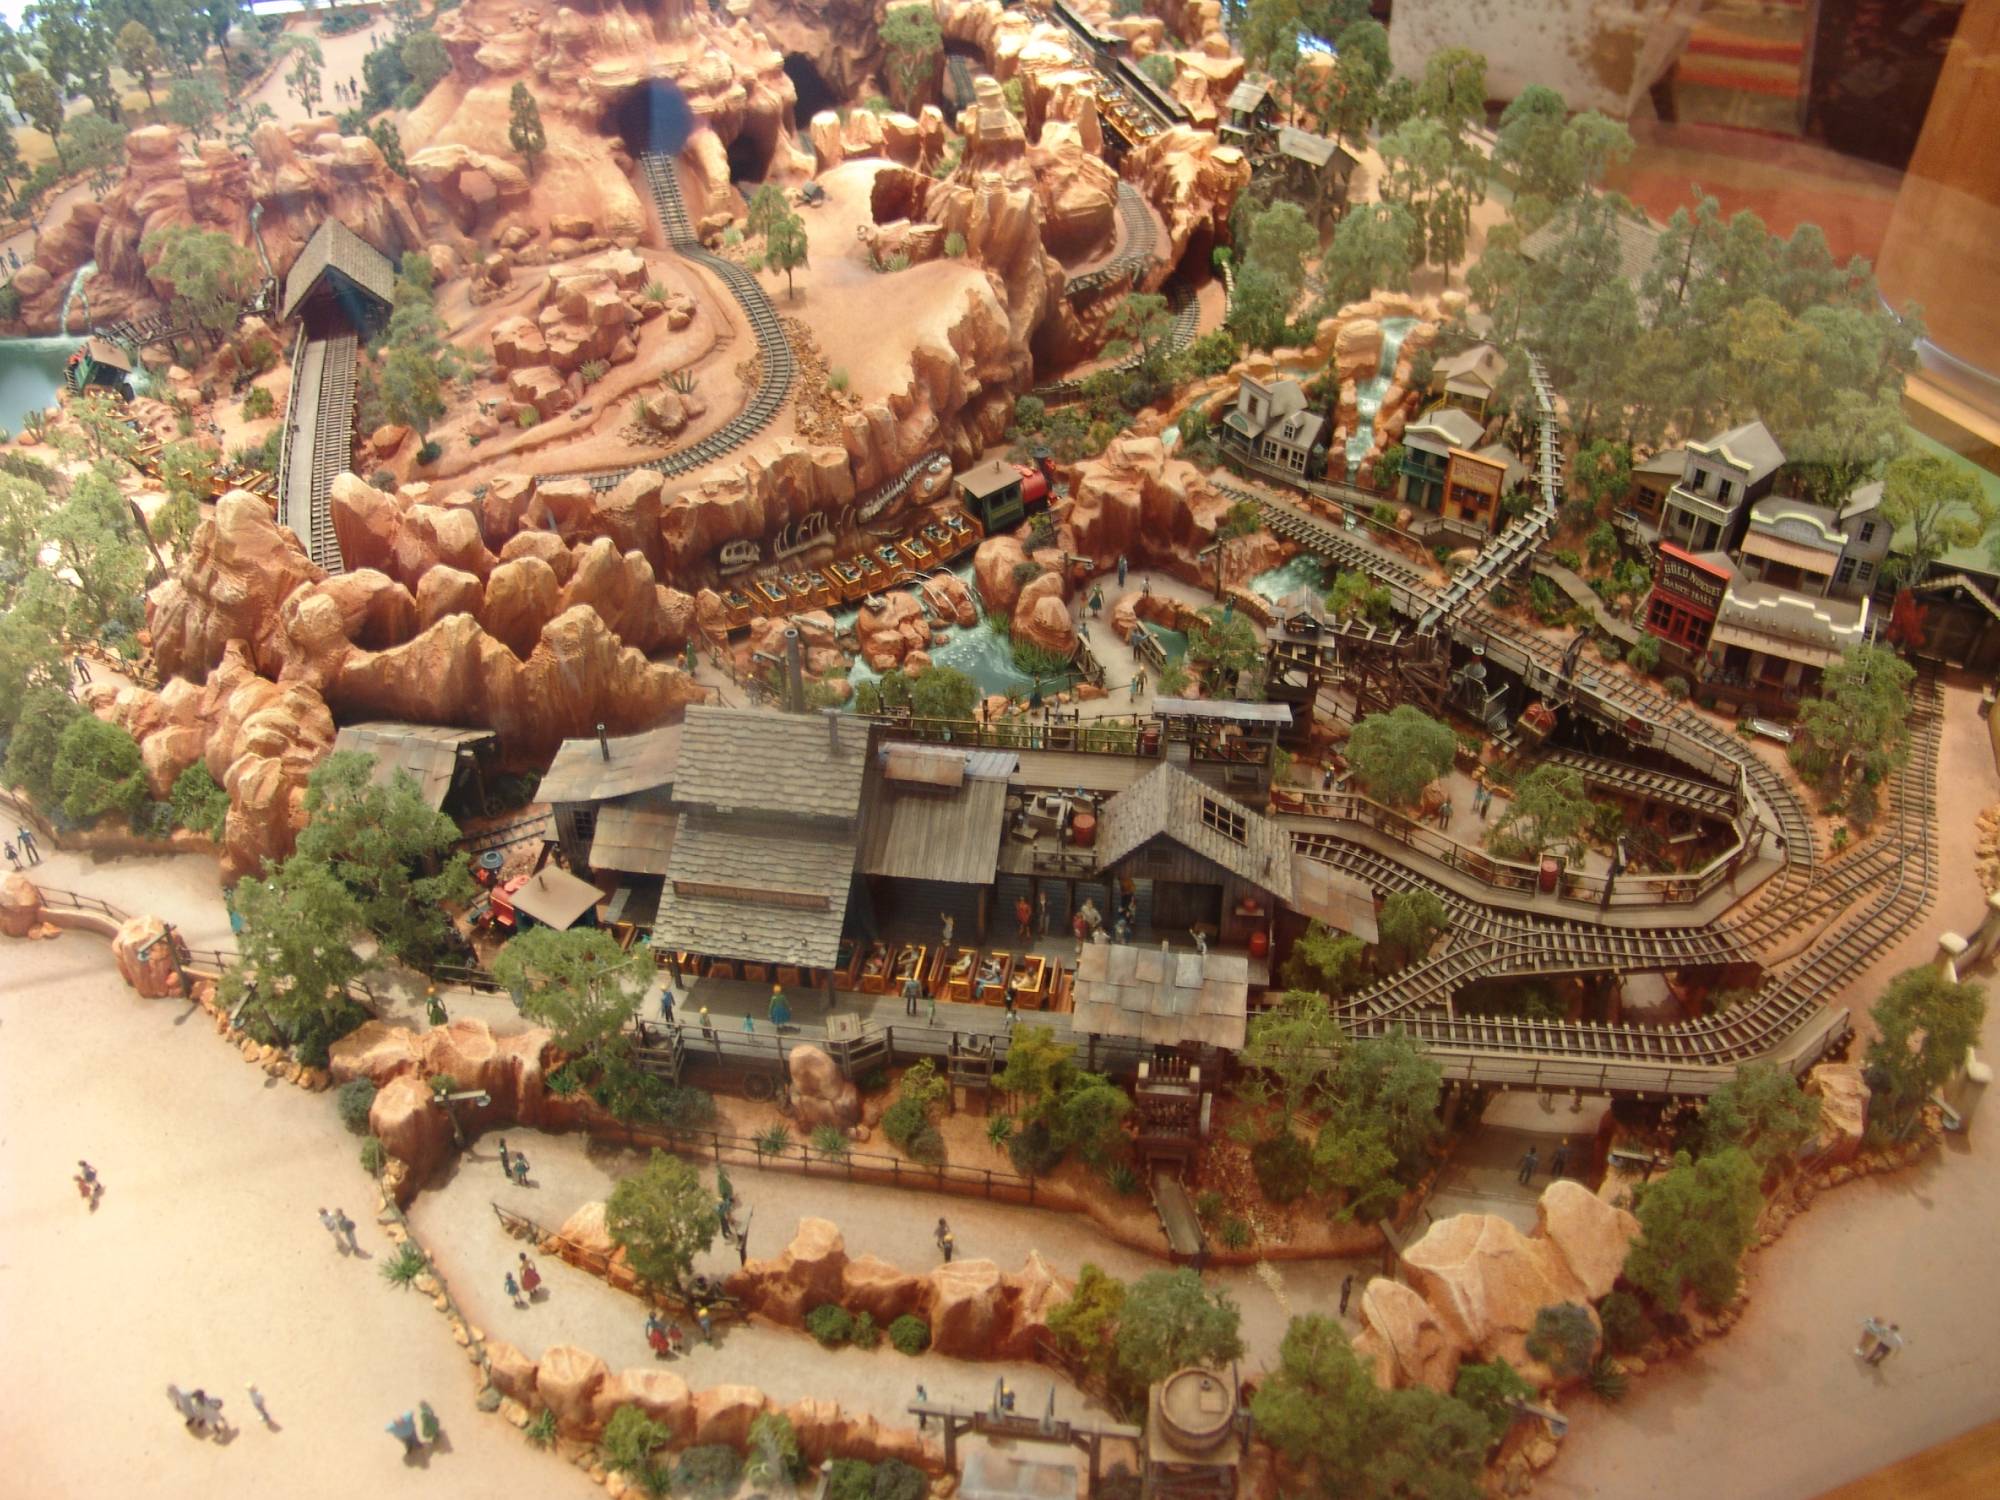 Disneyland Hotel - Big Thunder Mountain model